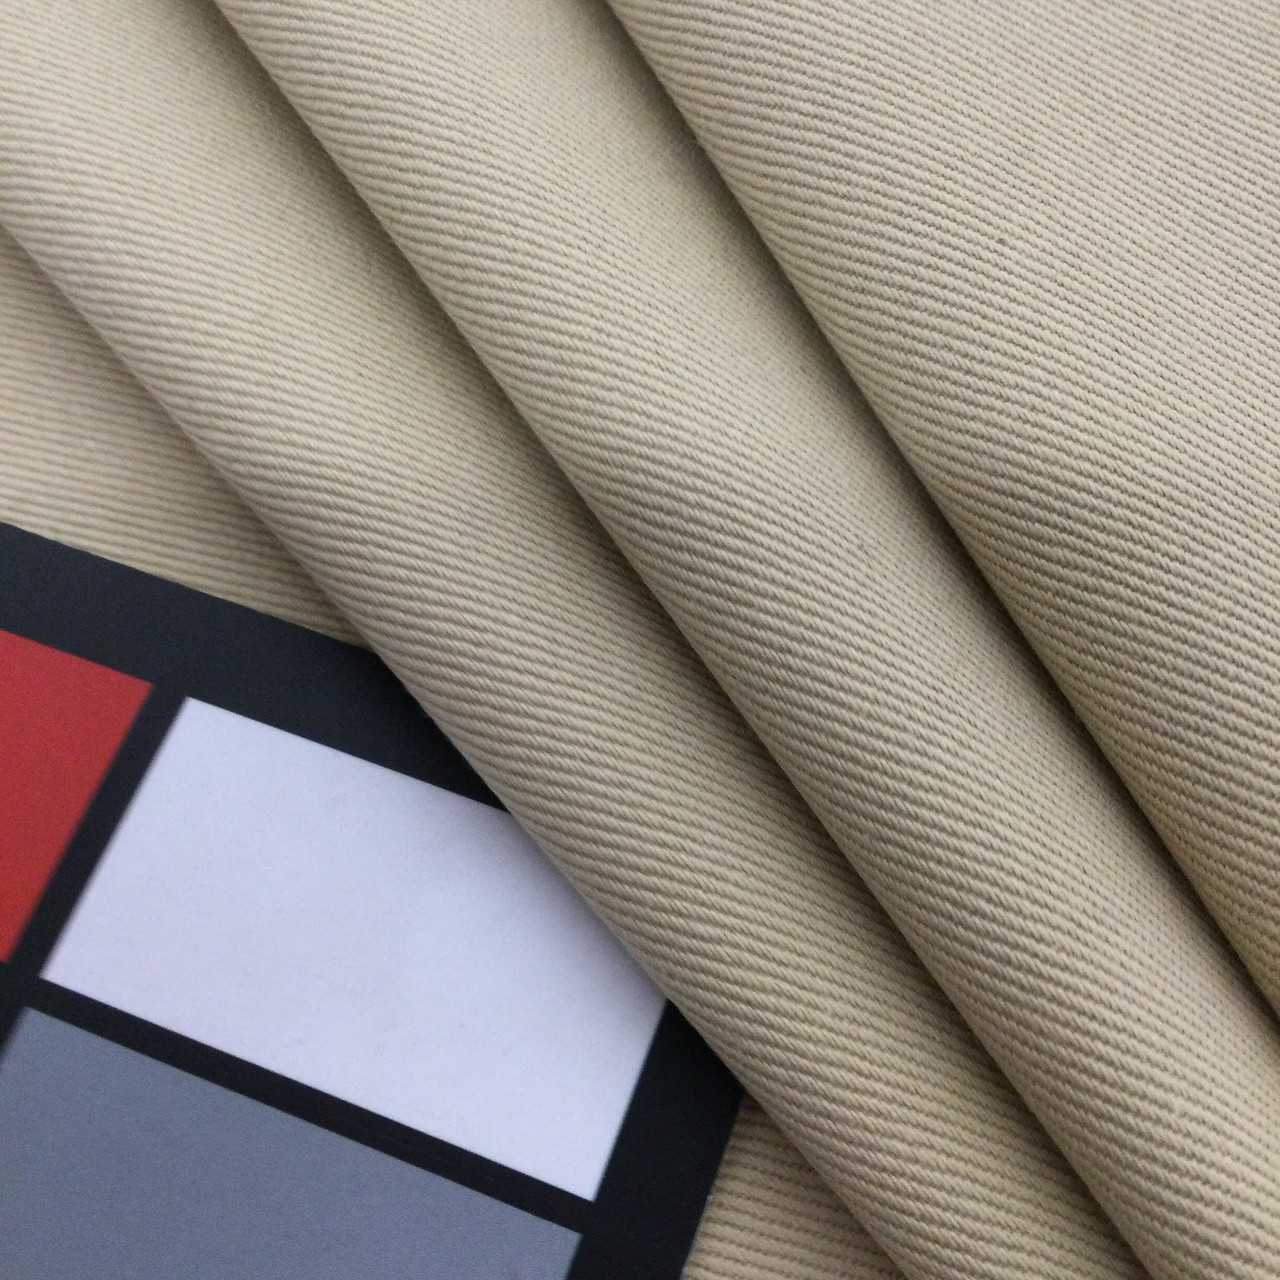 Medium Brown, Cotton Twill Fabric, 8 oz., Apparel / Slipcovers / Bedding, 54 Wide